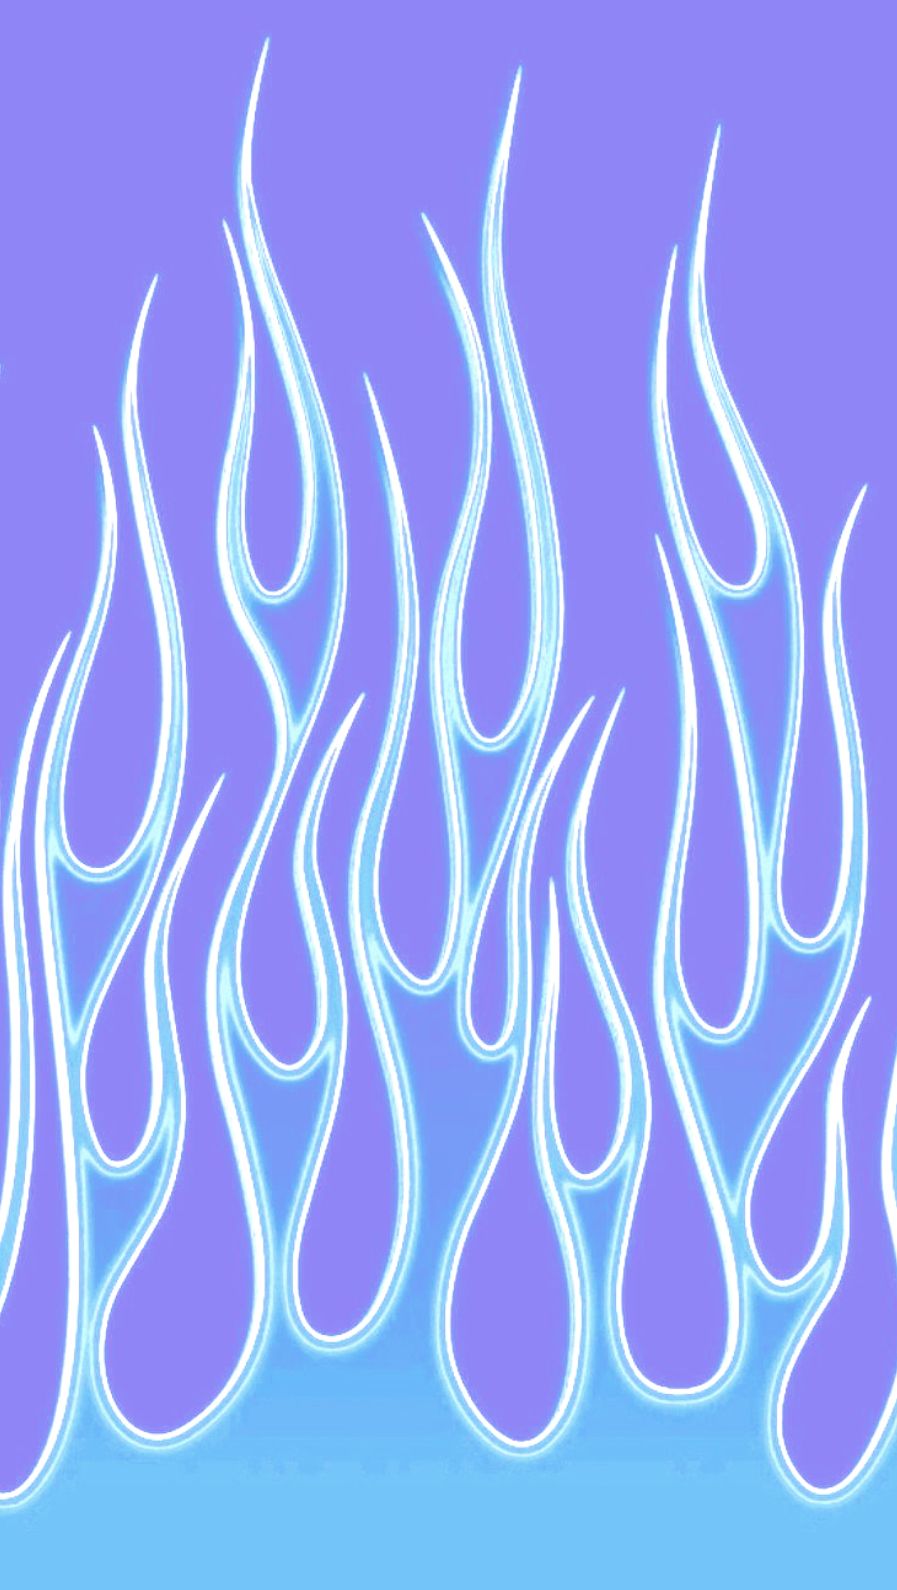 Flames. Aesthetic iphone wallpaper, iPhone wallpaper tumblr aesthetic, Edgy wallpaper